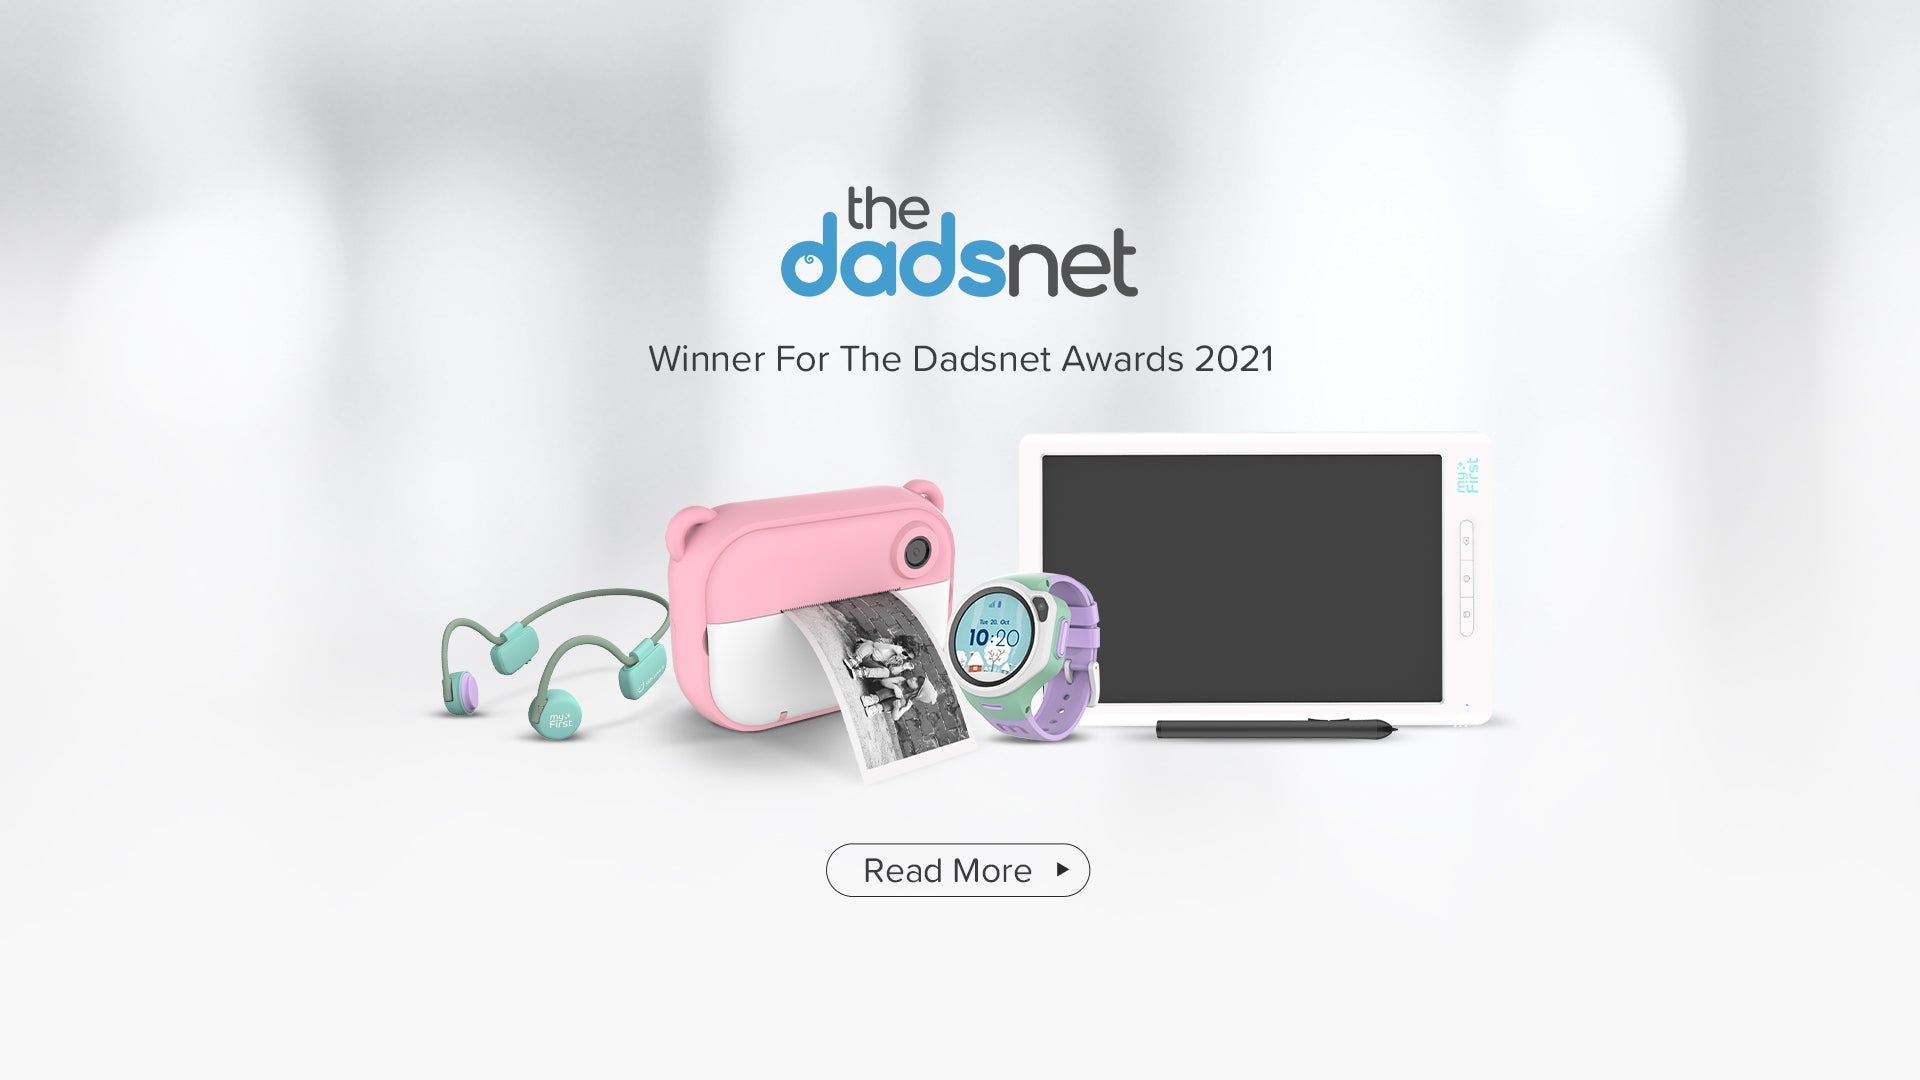 The Dadsnet Awards 2021